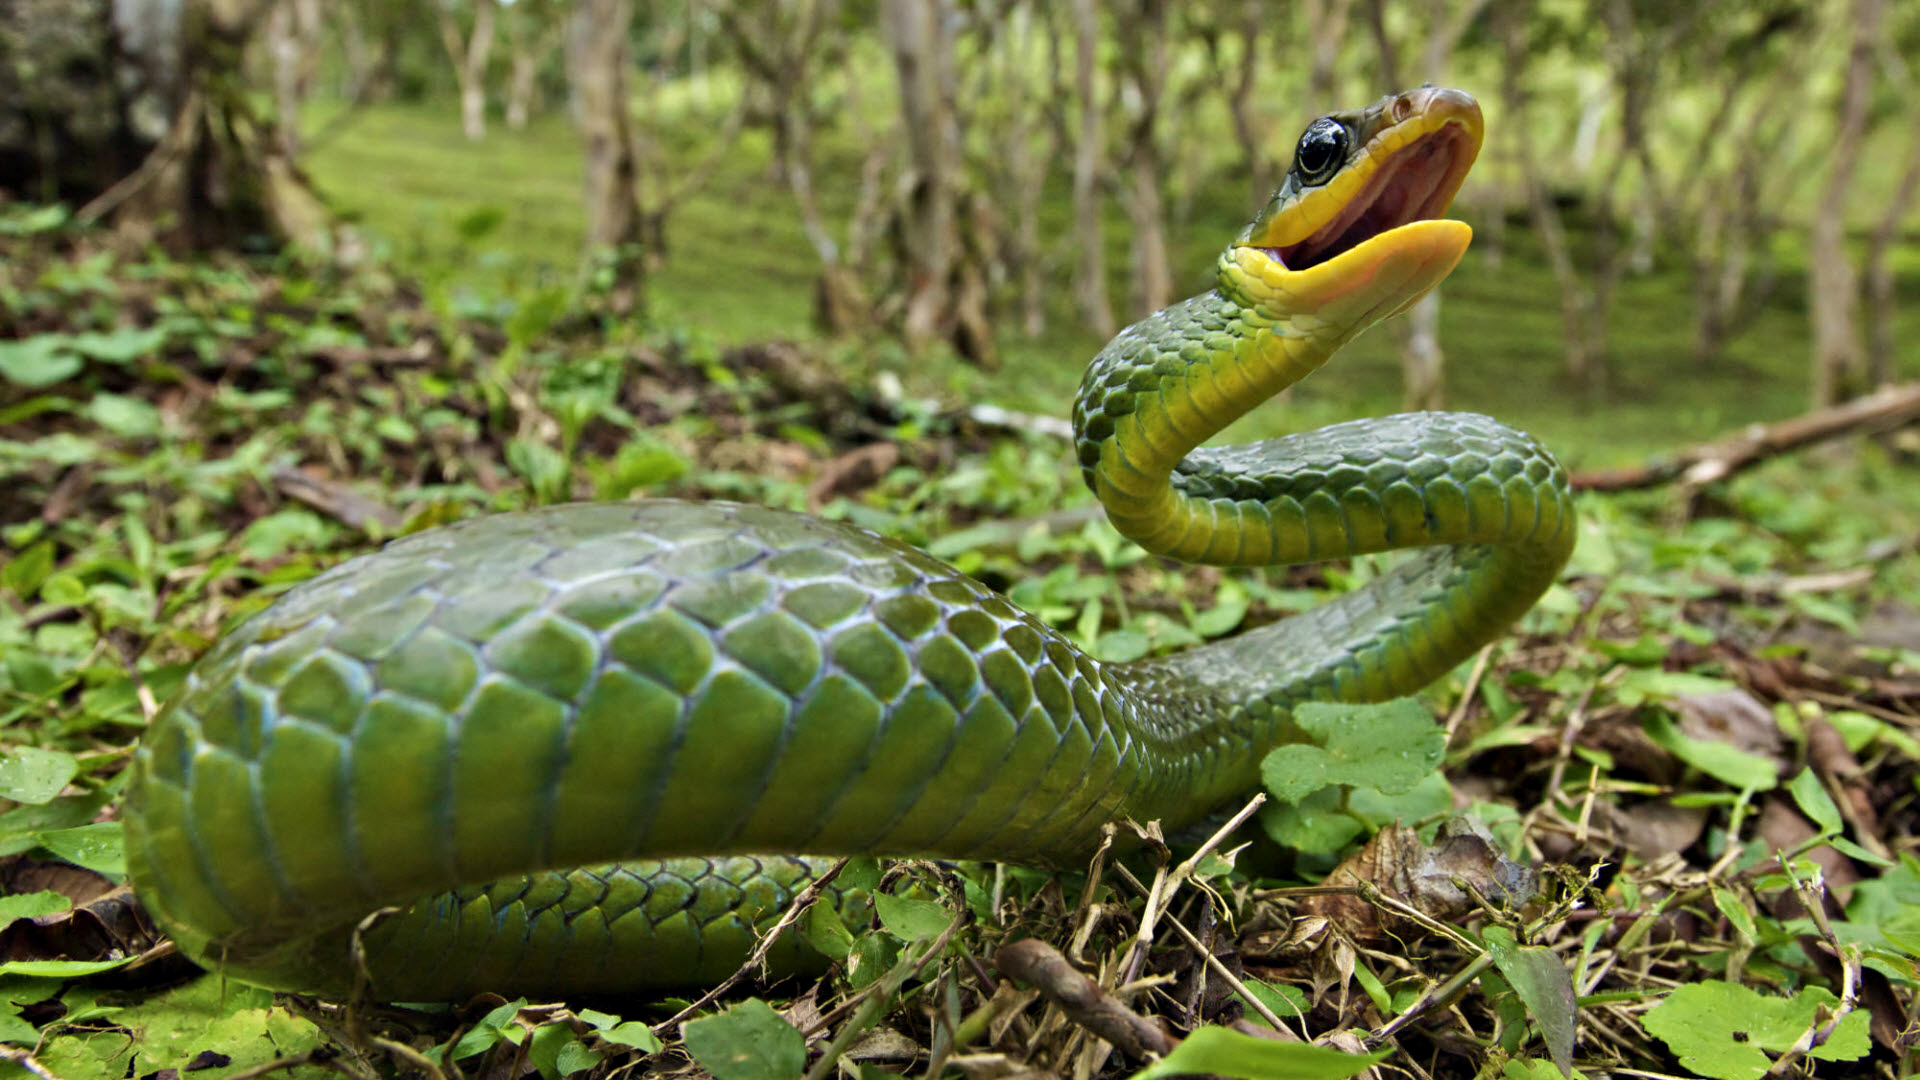 A mesmerizing snake slithering amidst nature's enchanting beauty.